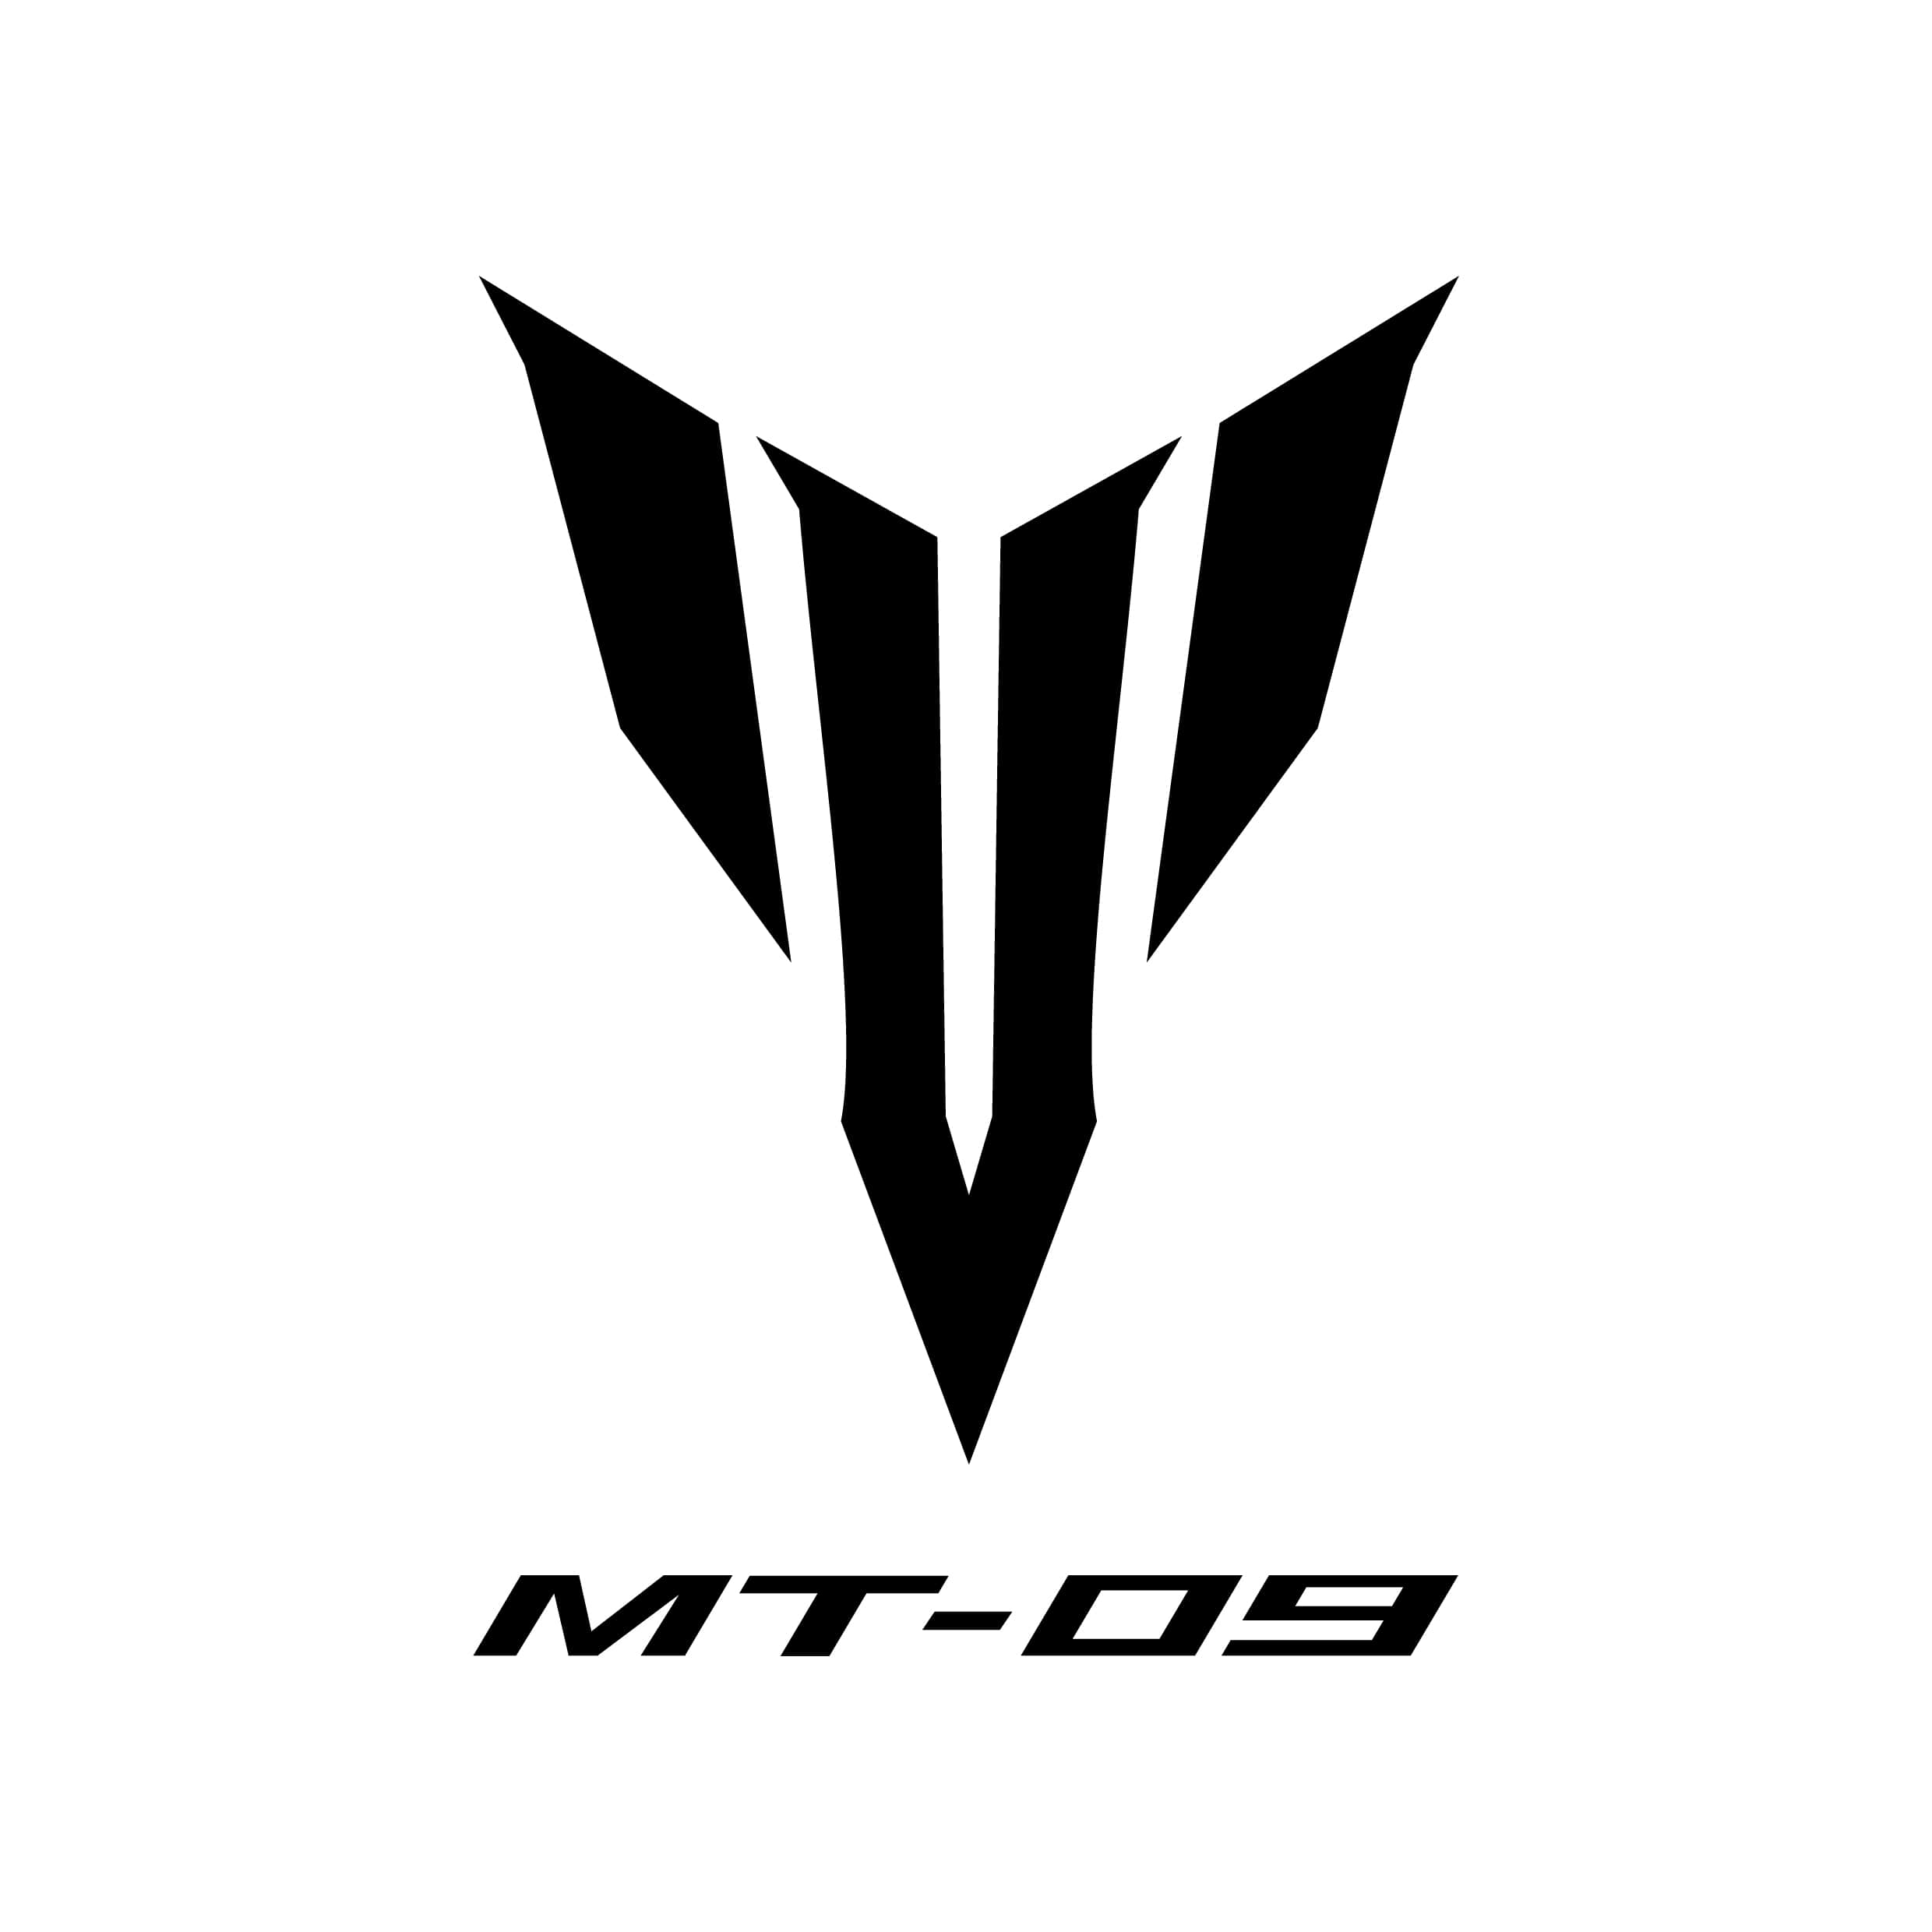 stickers-mt-09-yamaha-ref92-autocollant-moto-sticker-deux-roue-autocollants-decals-sponsors-tuning-sport-logo-bike-scooter-min